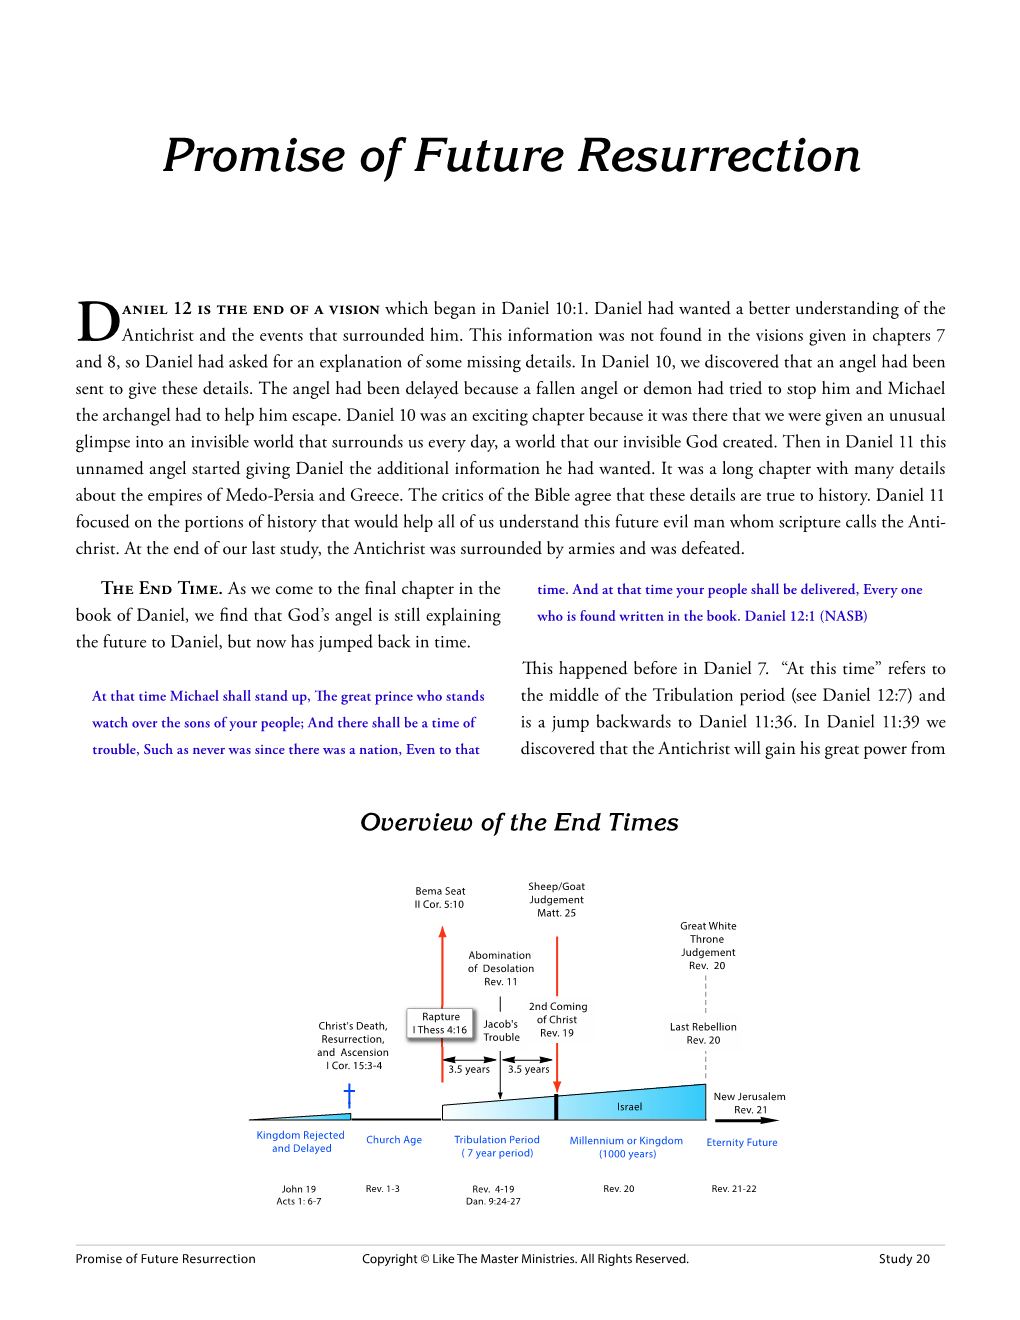 The Promise of Future Resurrection Daniel